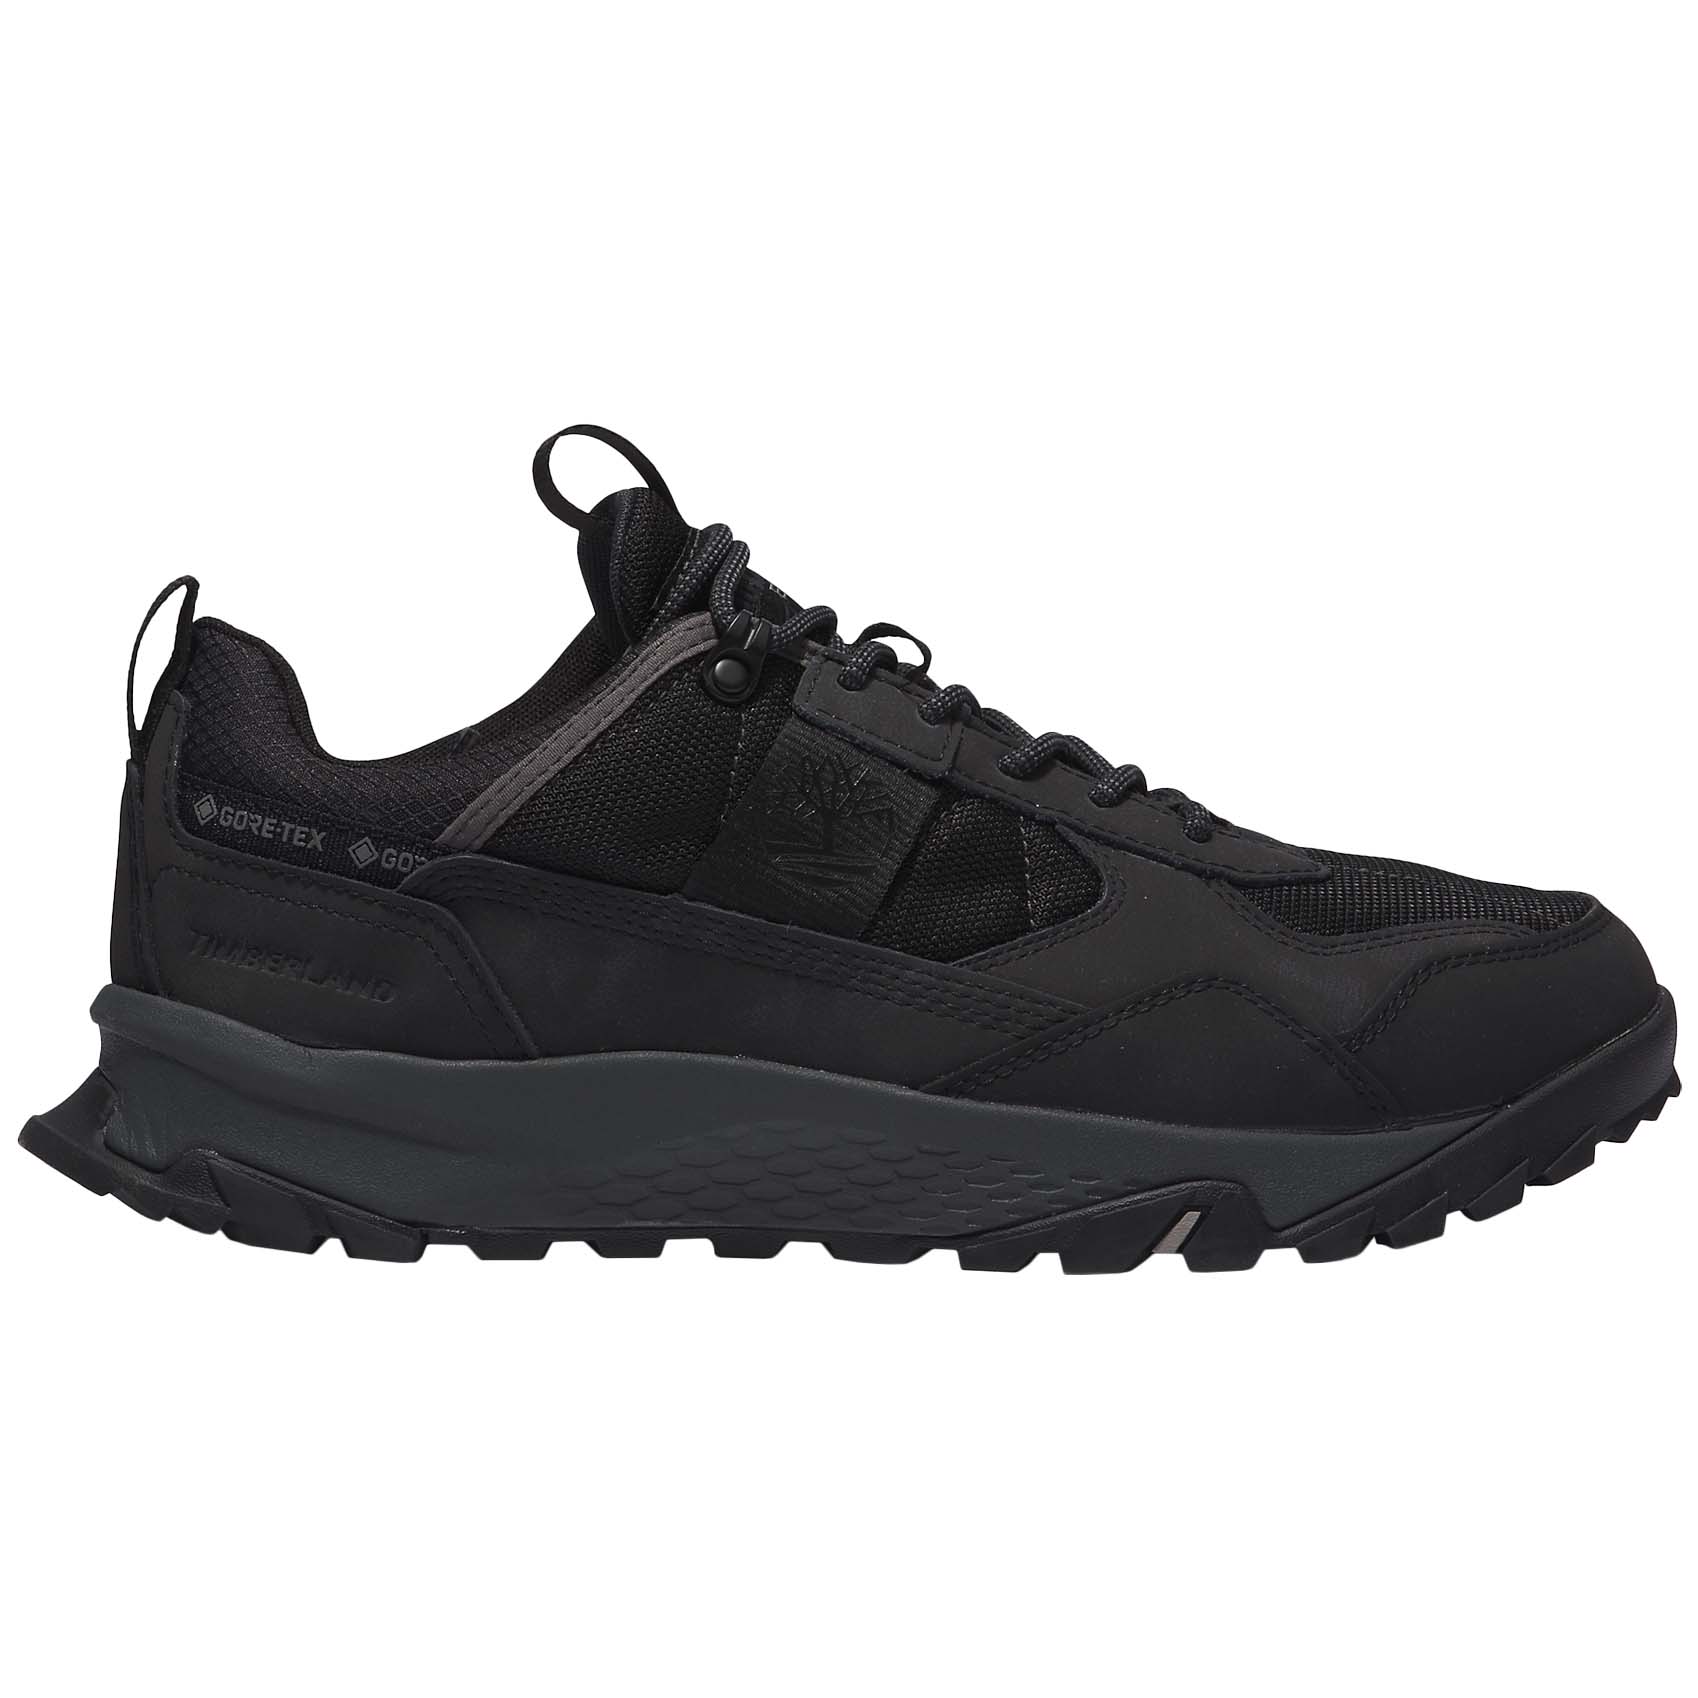 Timberland Lincoln Peak Low GTX Men's Walking Shoes